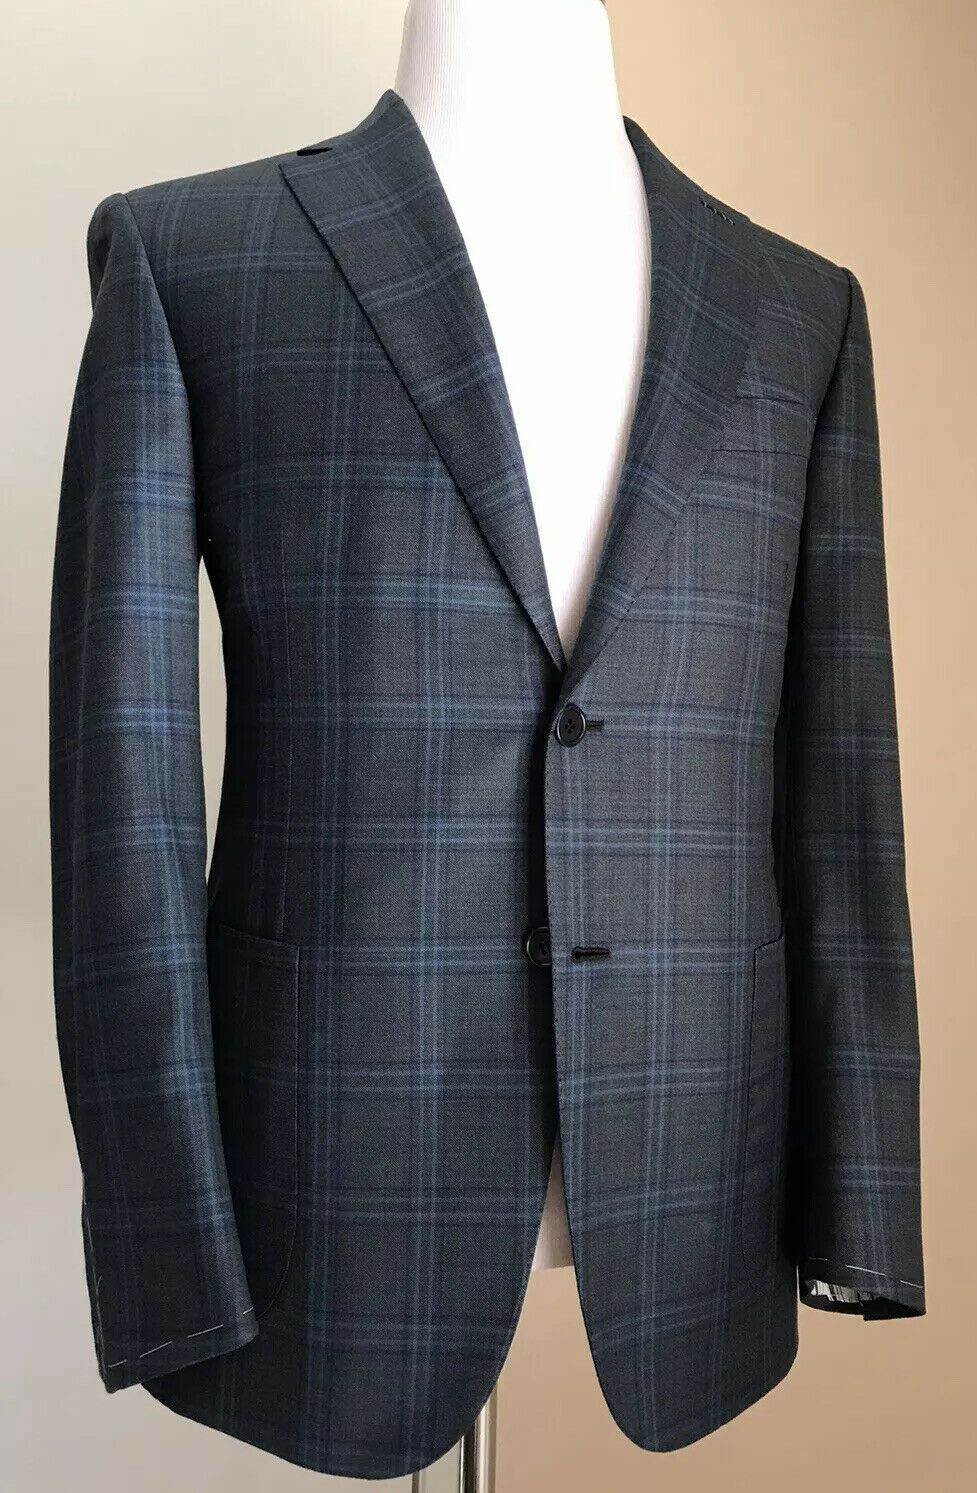 NWT $4500 Brioni Men’s Wool Sport Coat Blazer Jacket Green 40S US/50S Eu Italy